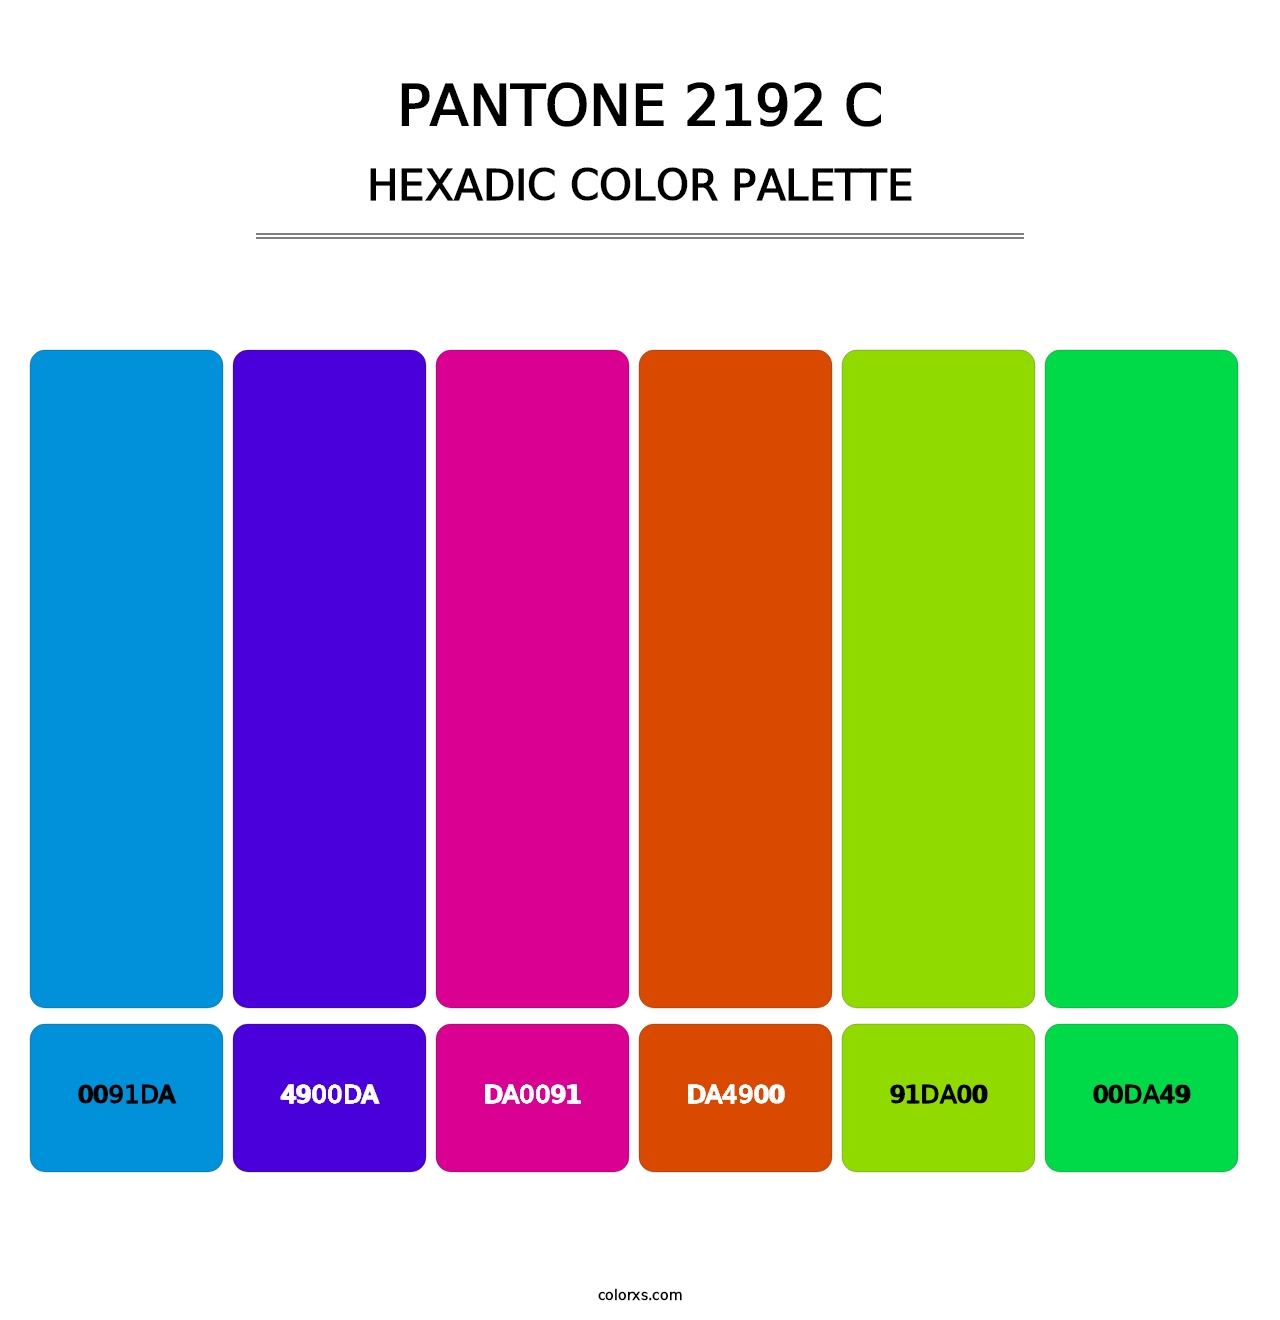 PANTONE 2192 C - Hexadic Color Palette